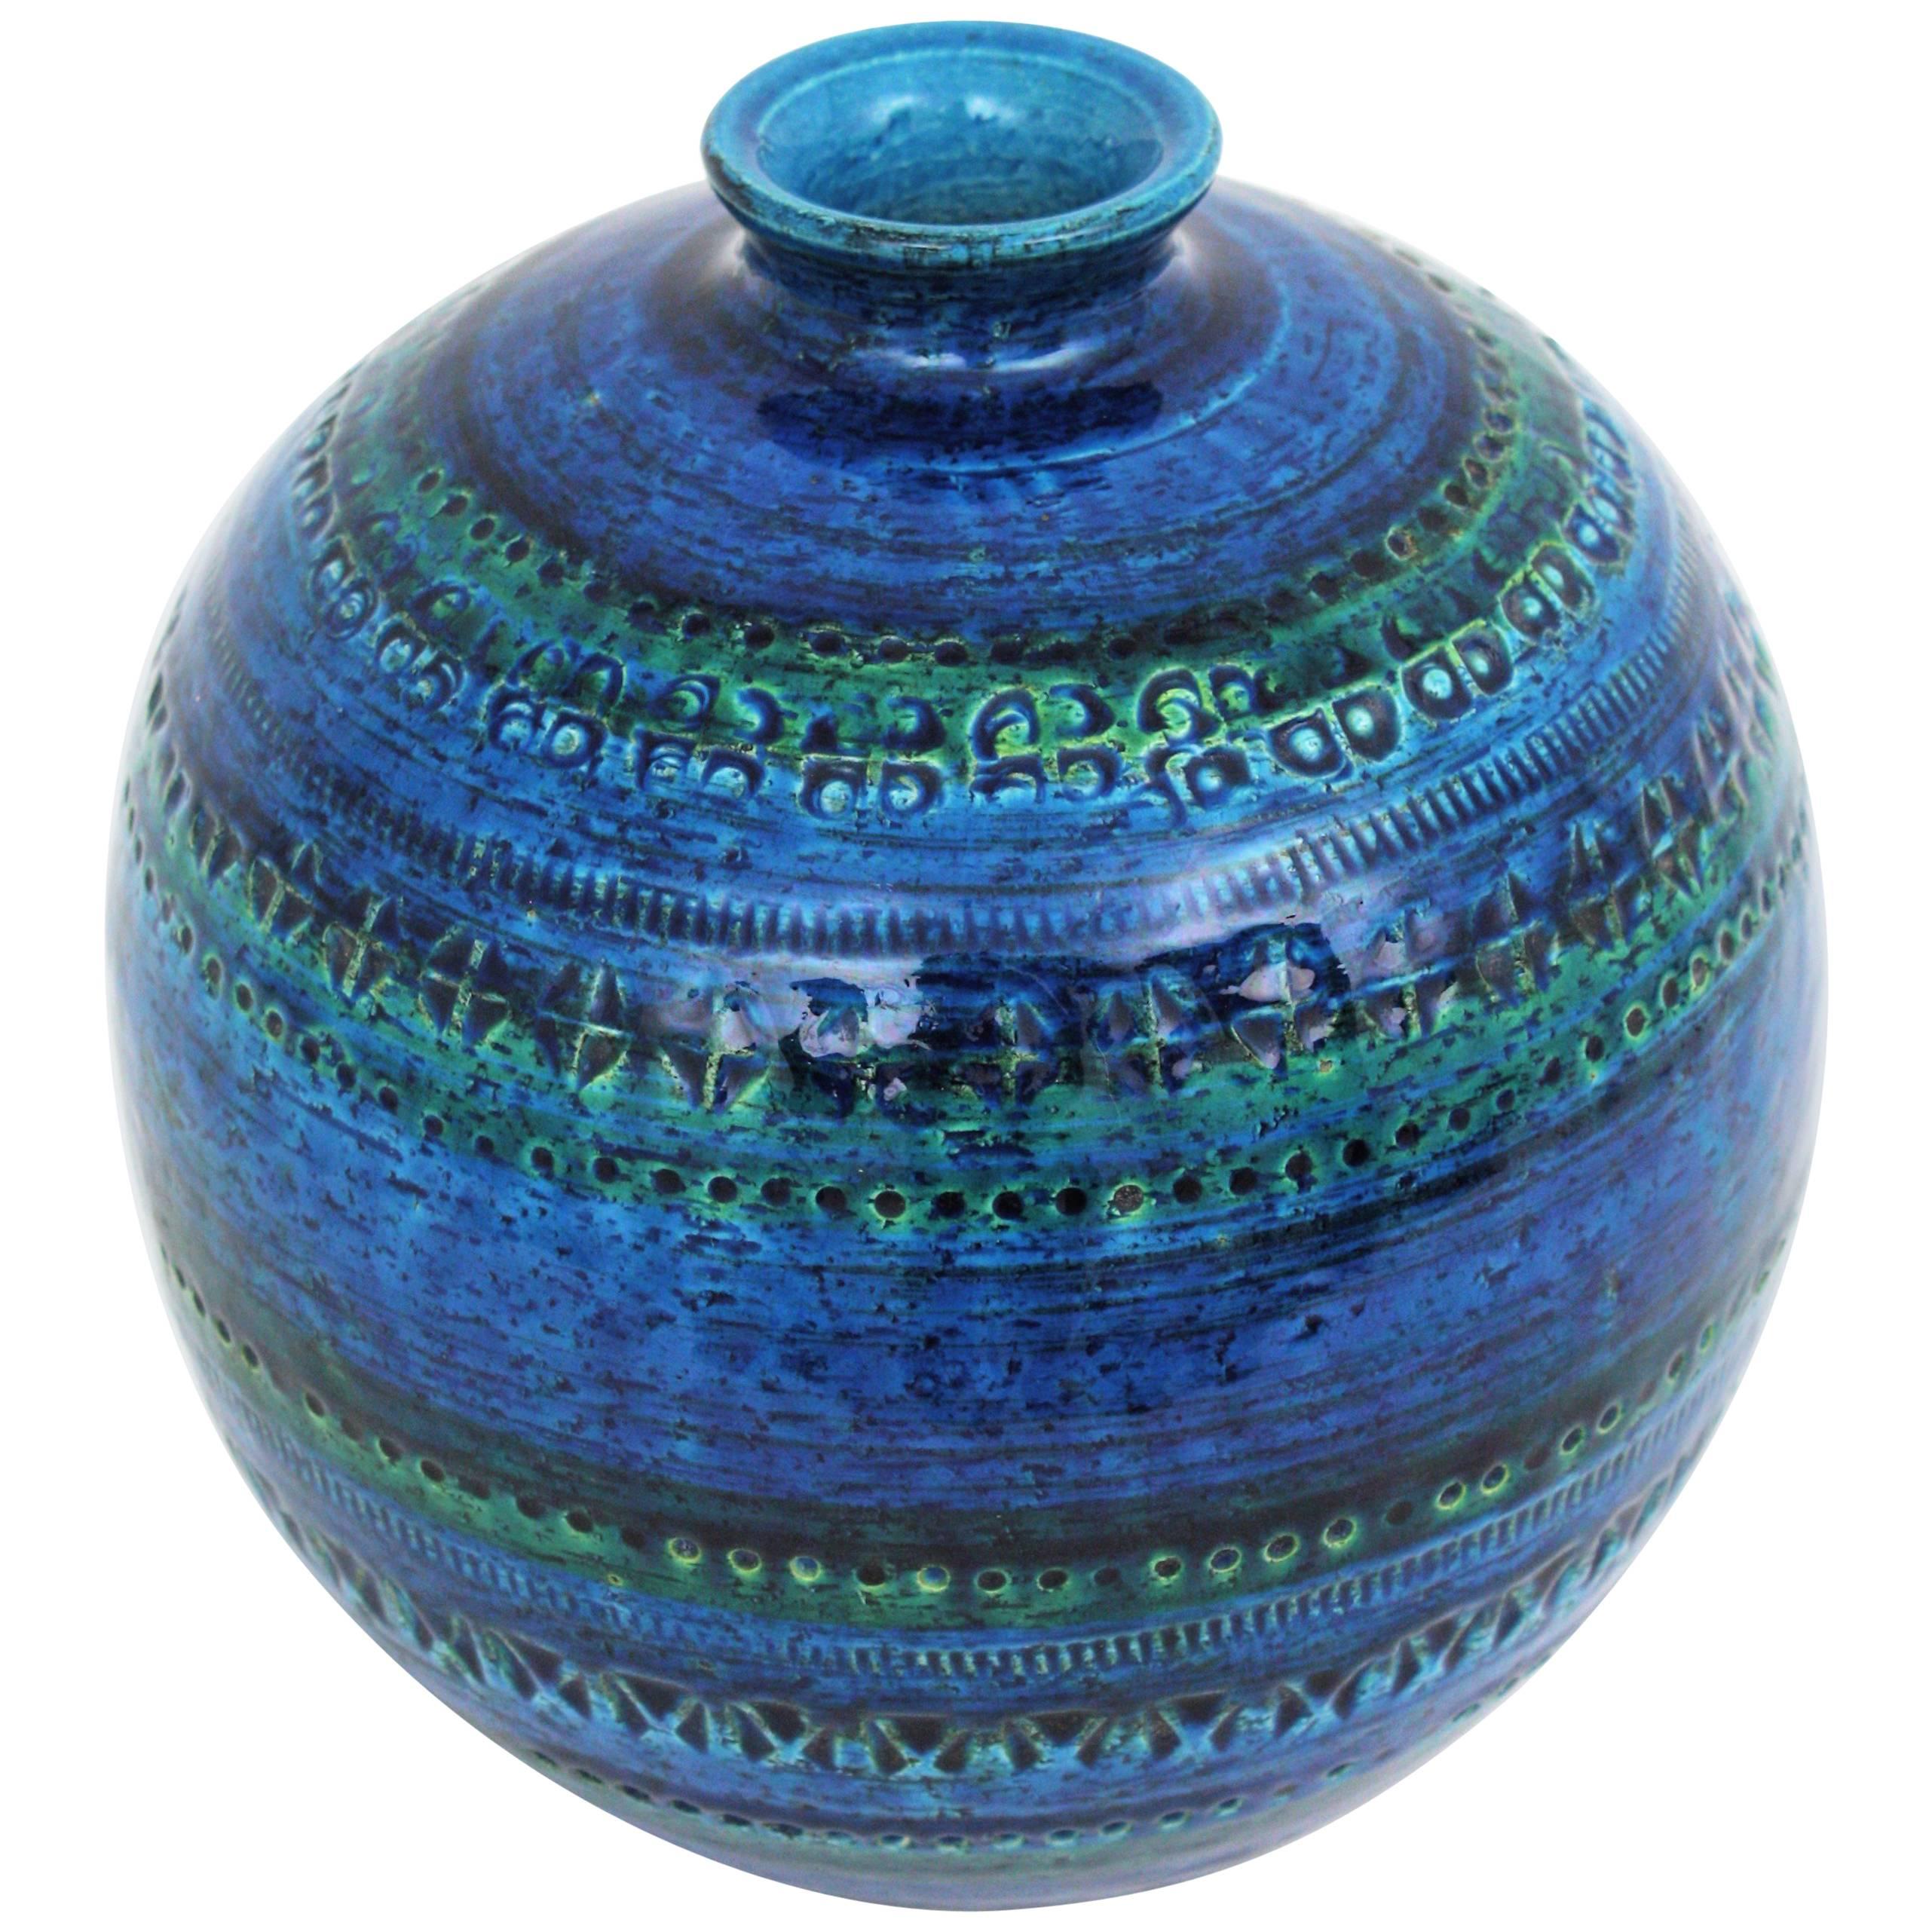 1960er Jahre Aldo Londi für Bitossi Rimini Blau glasierte Keramik Große Runde Vase